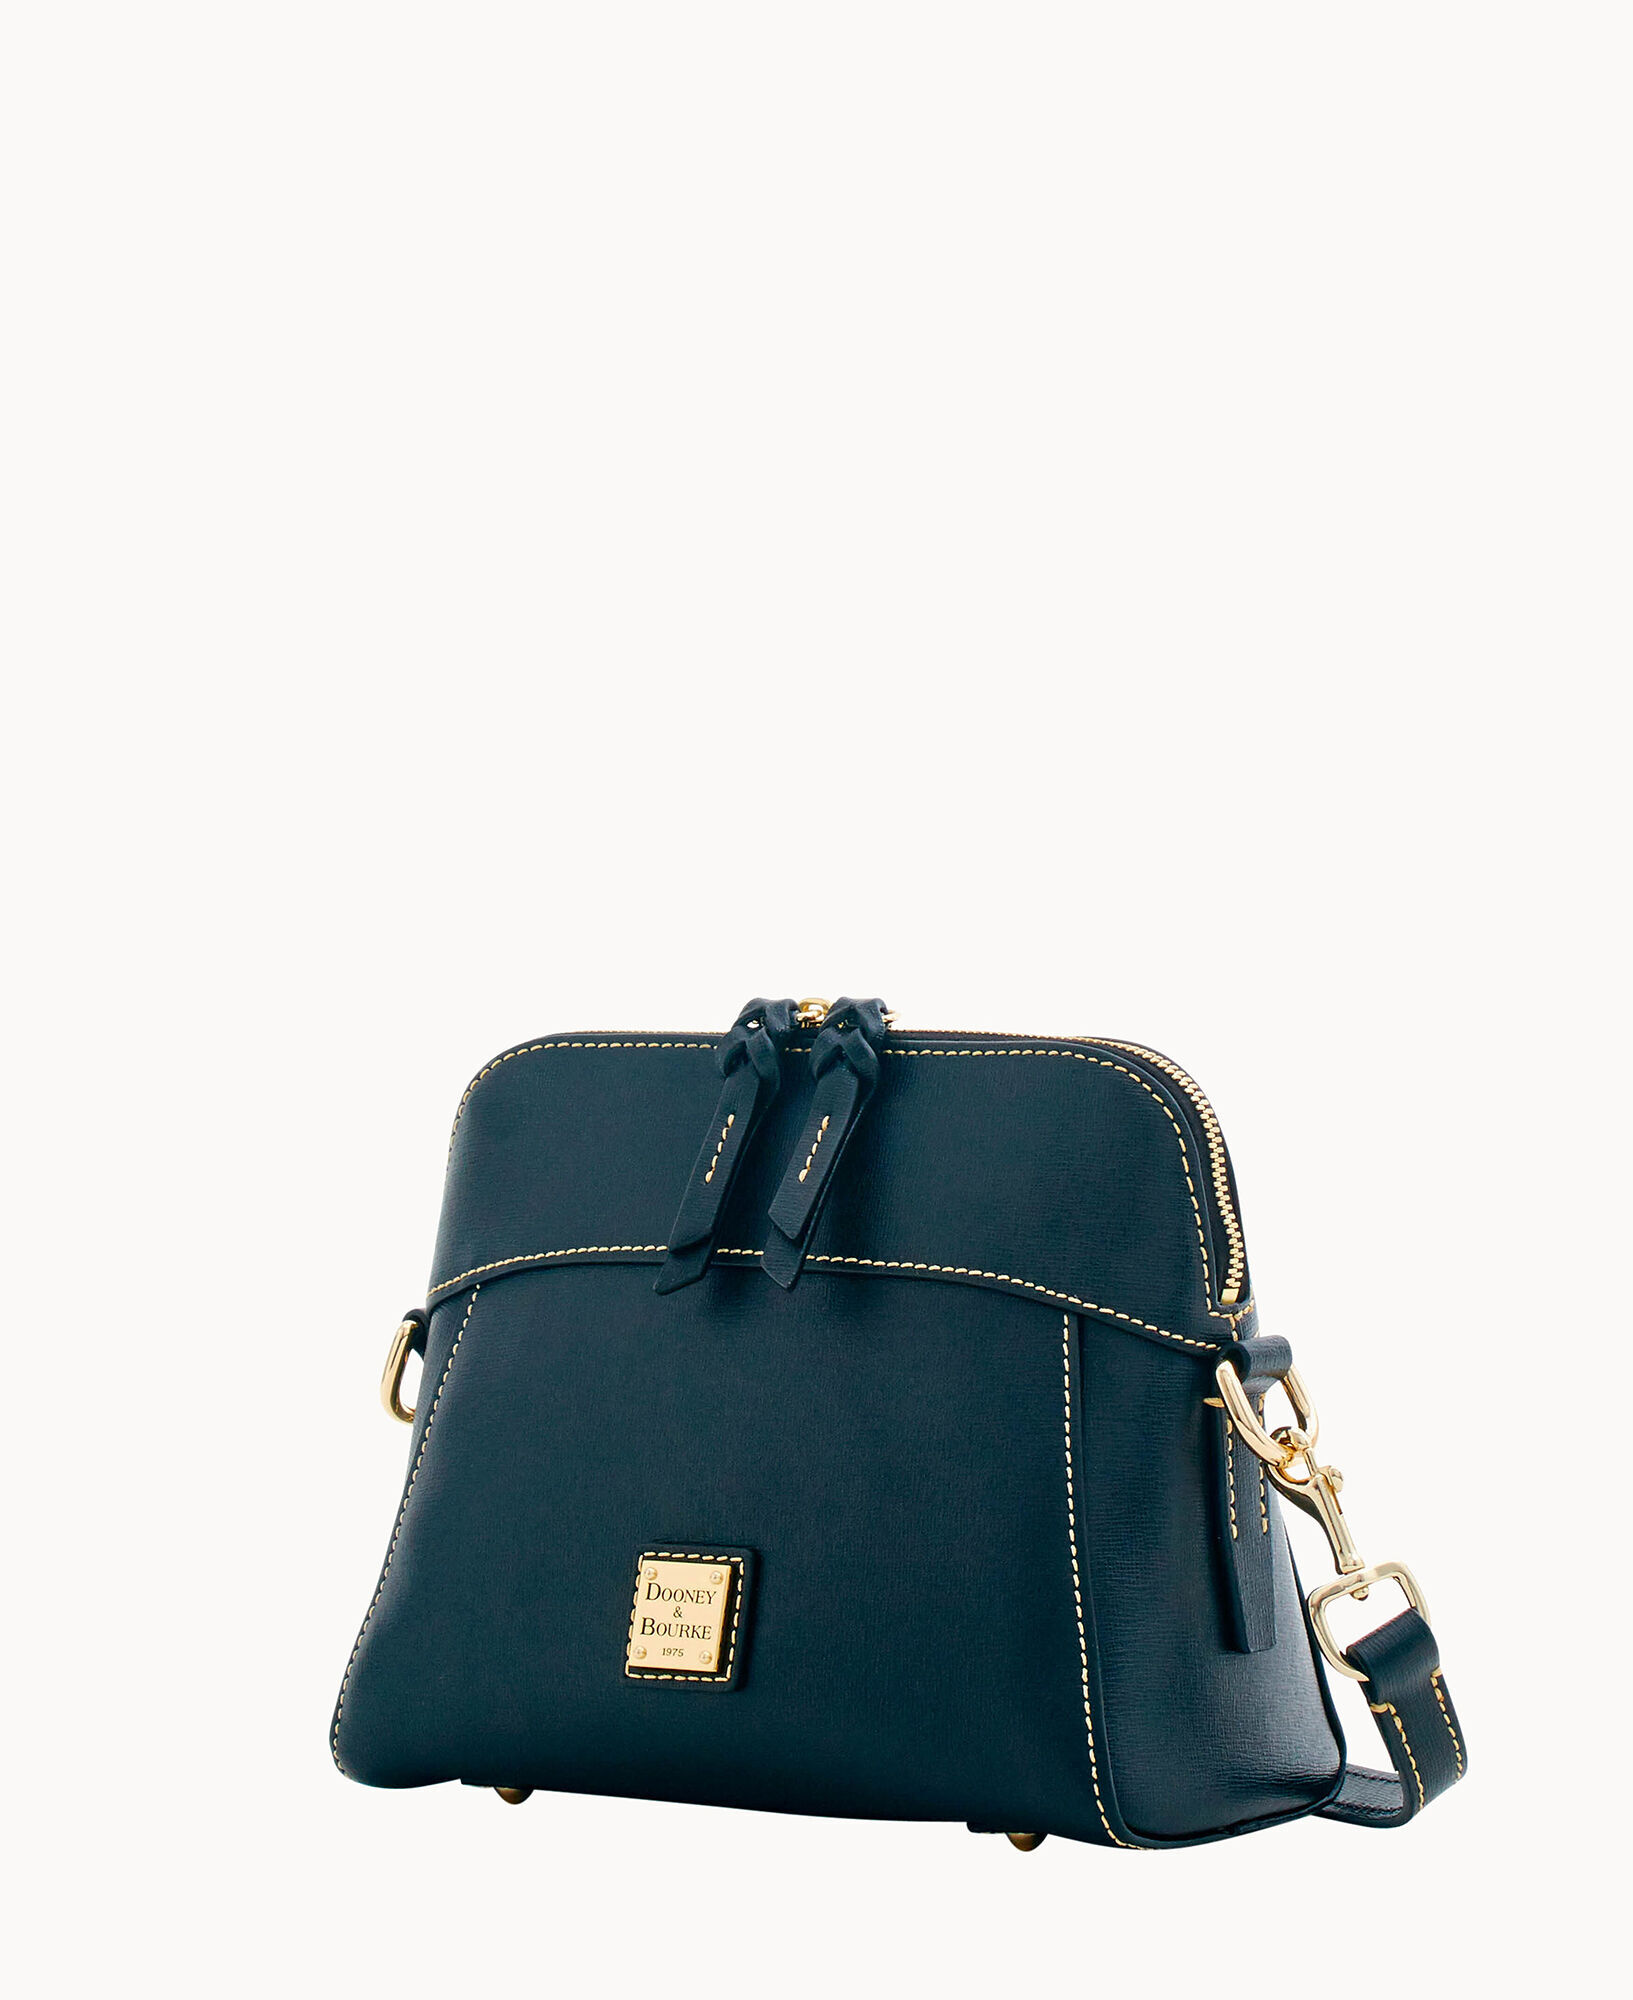 Dooney & Bourke Handbag, Saffiano Saddle Bag Crossbody - Black: Handbags